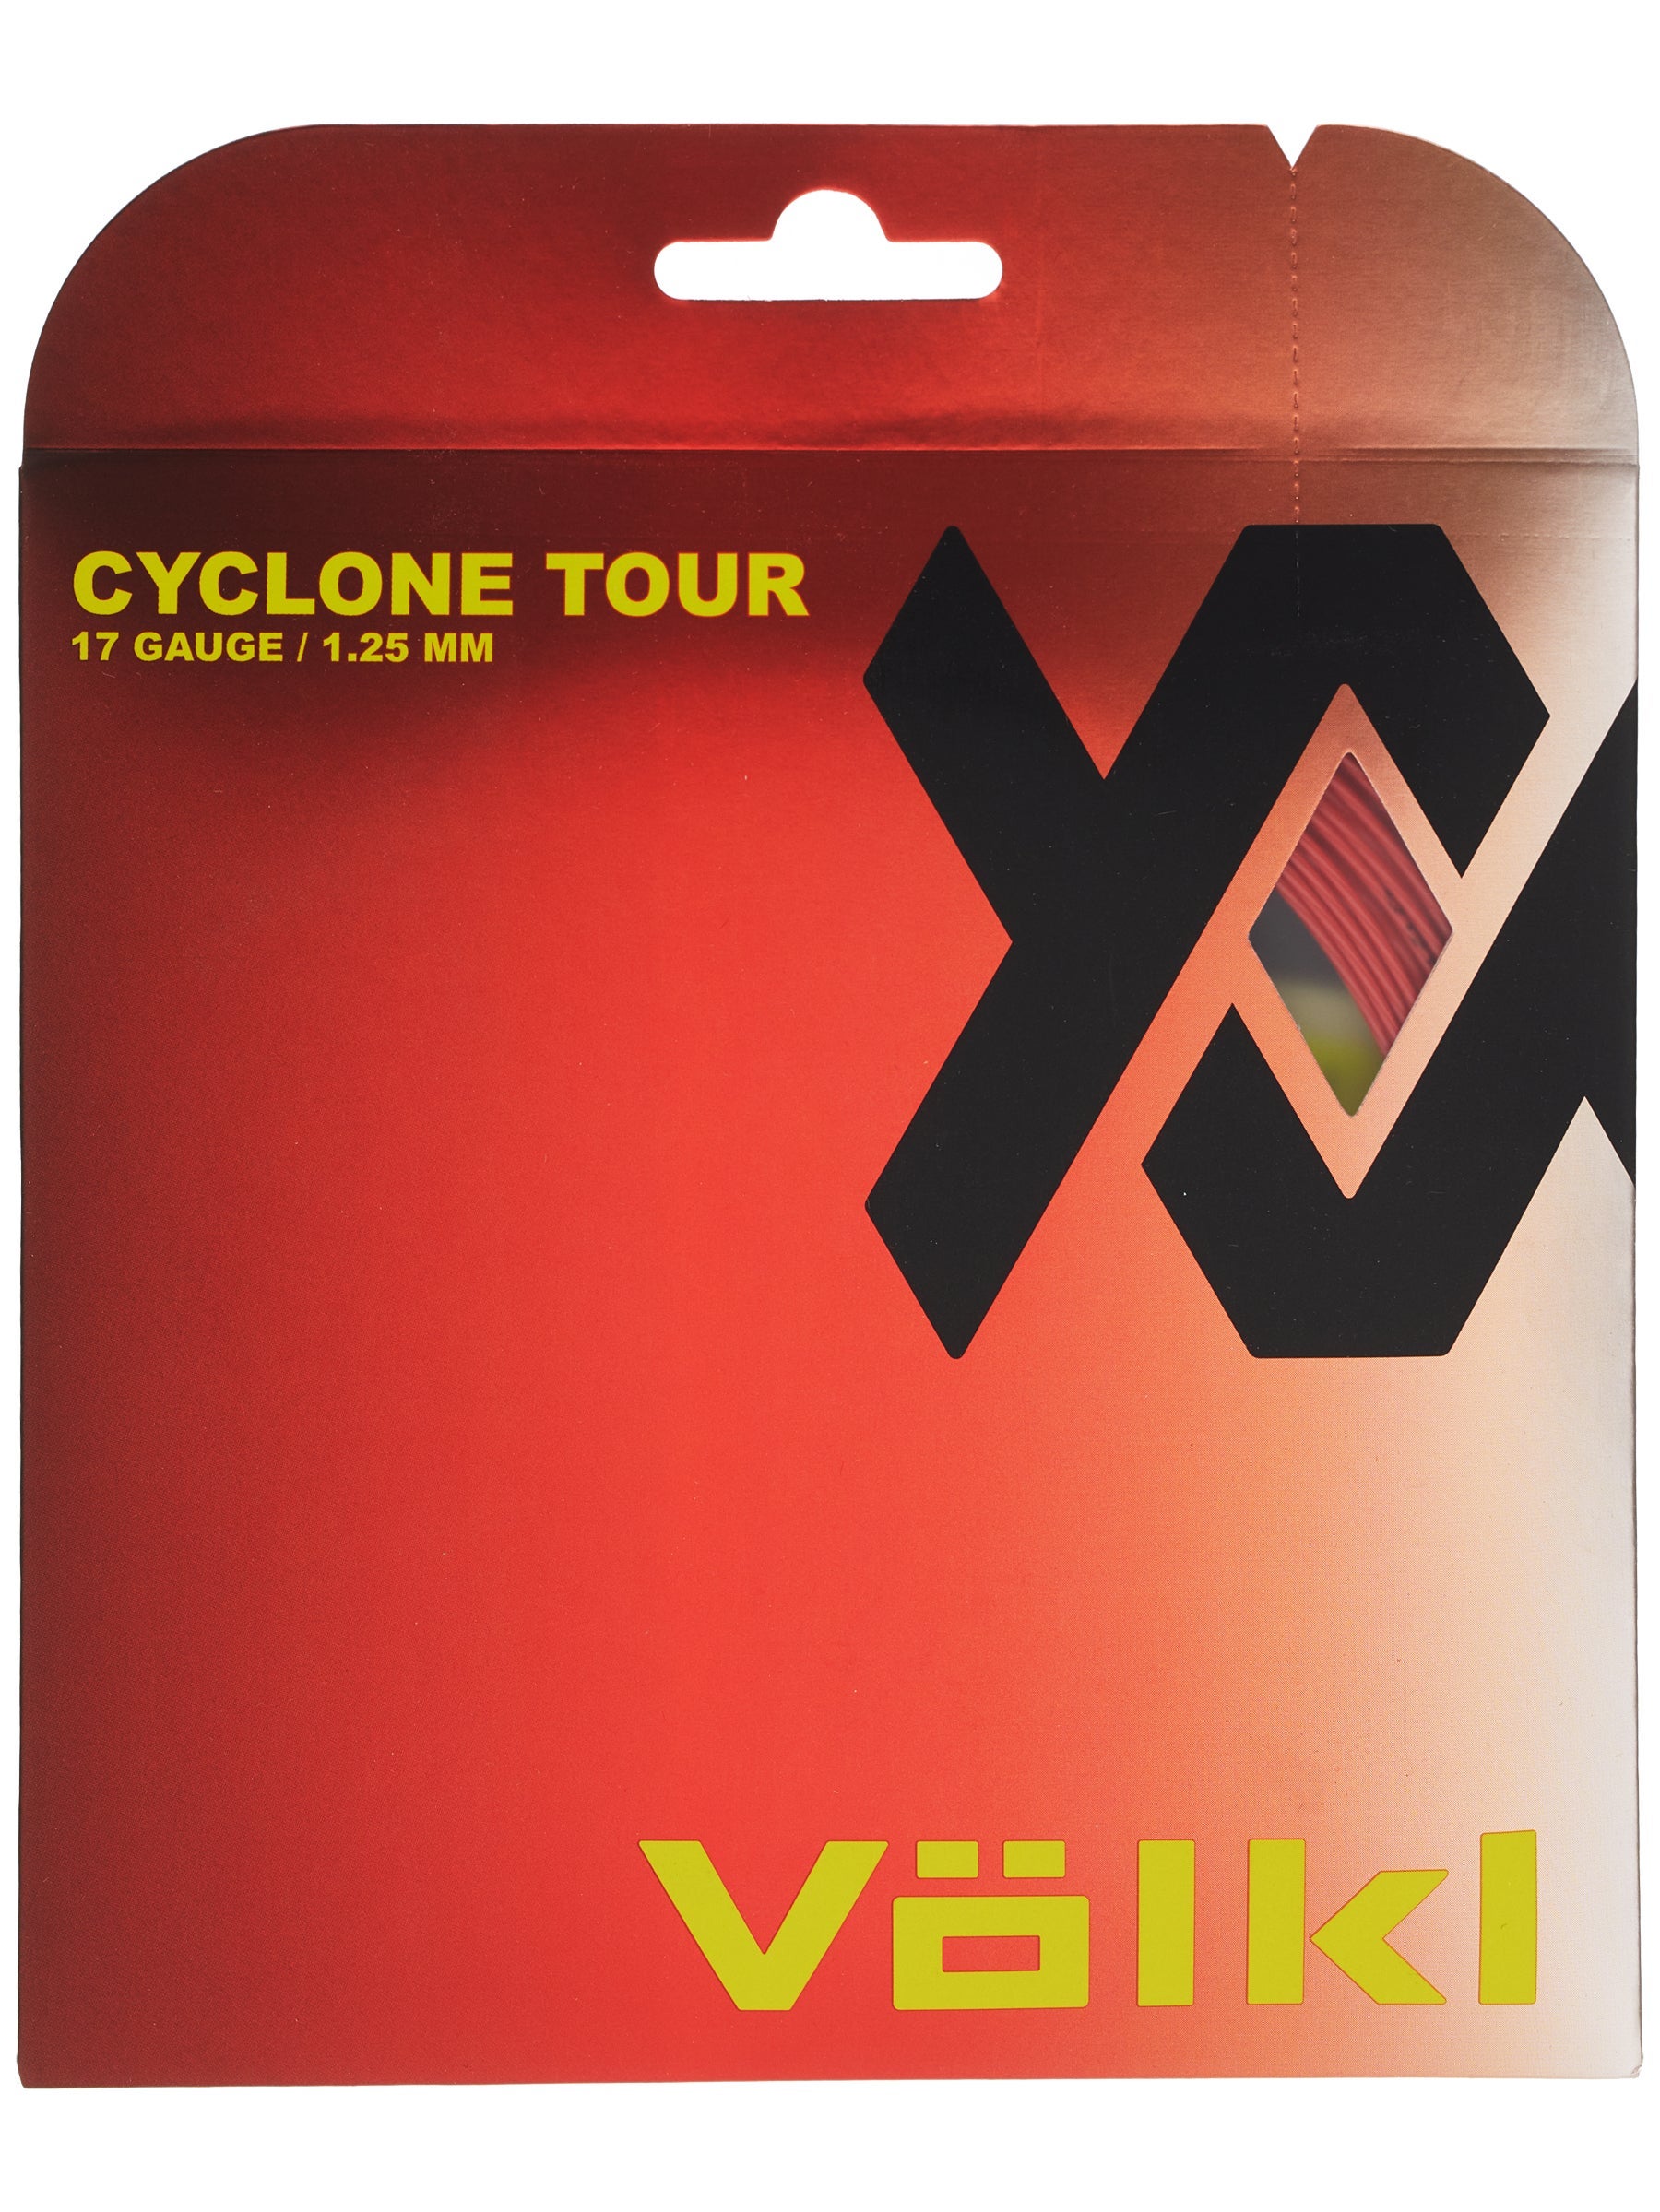 Volkl Cyclone tour 16 17 18 tennis string